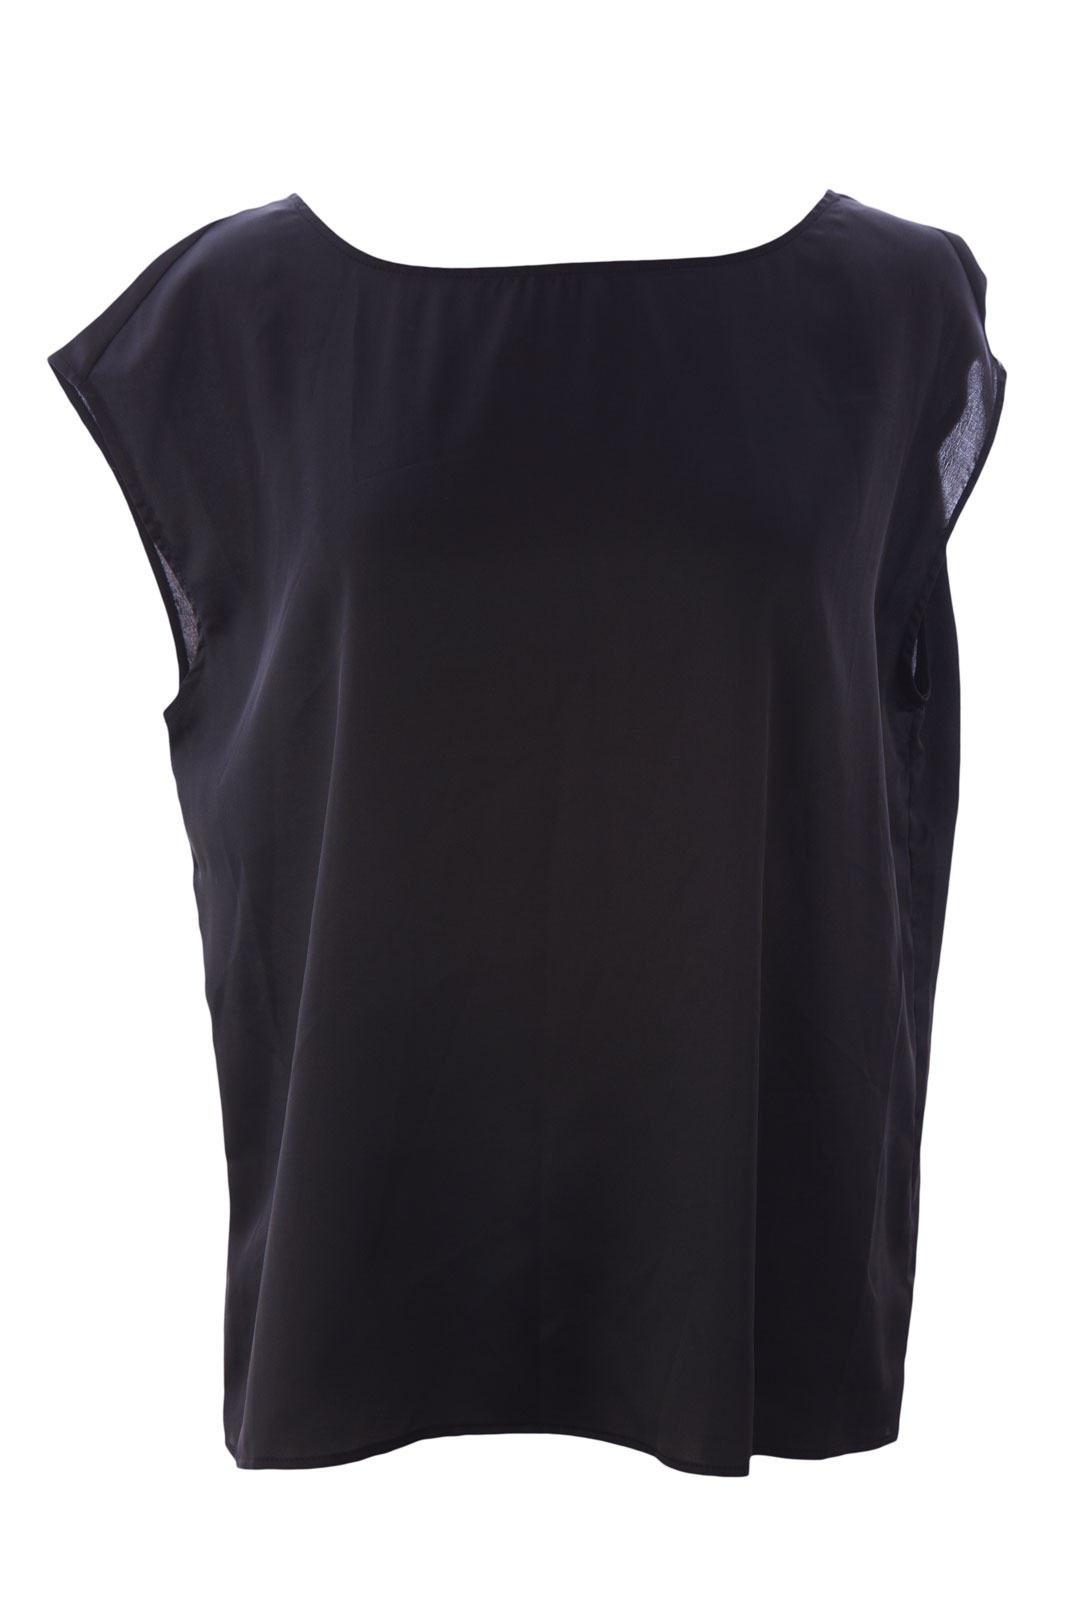 August Silk Women's Cap Sleeve Blouse NWT $48